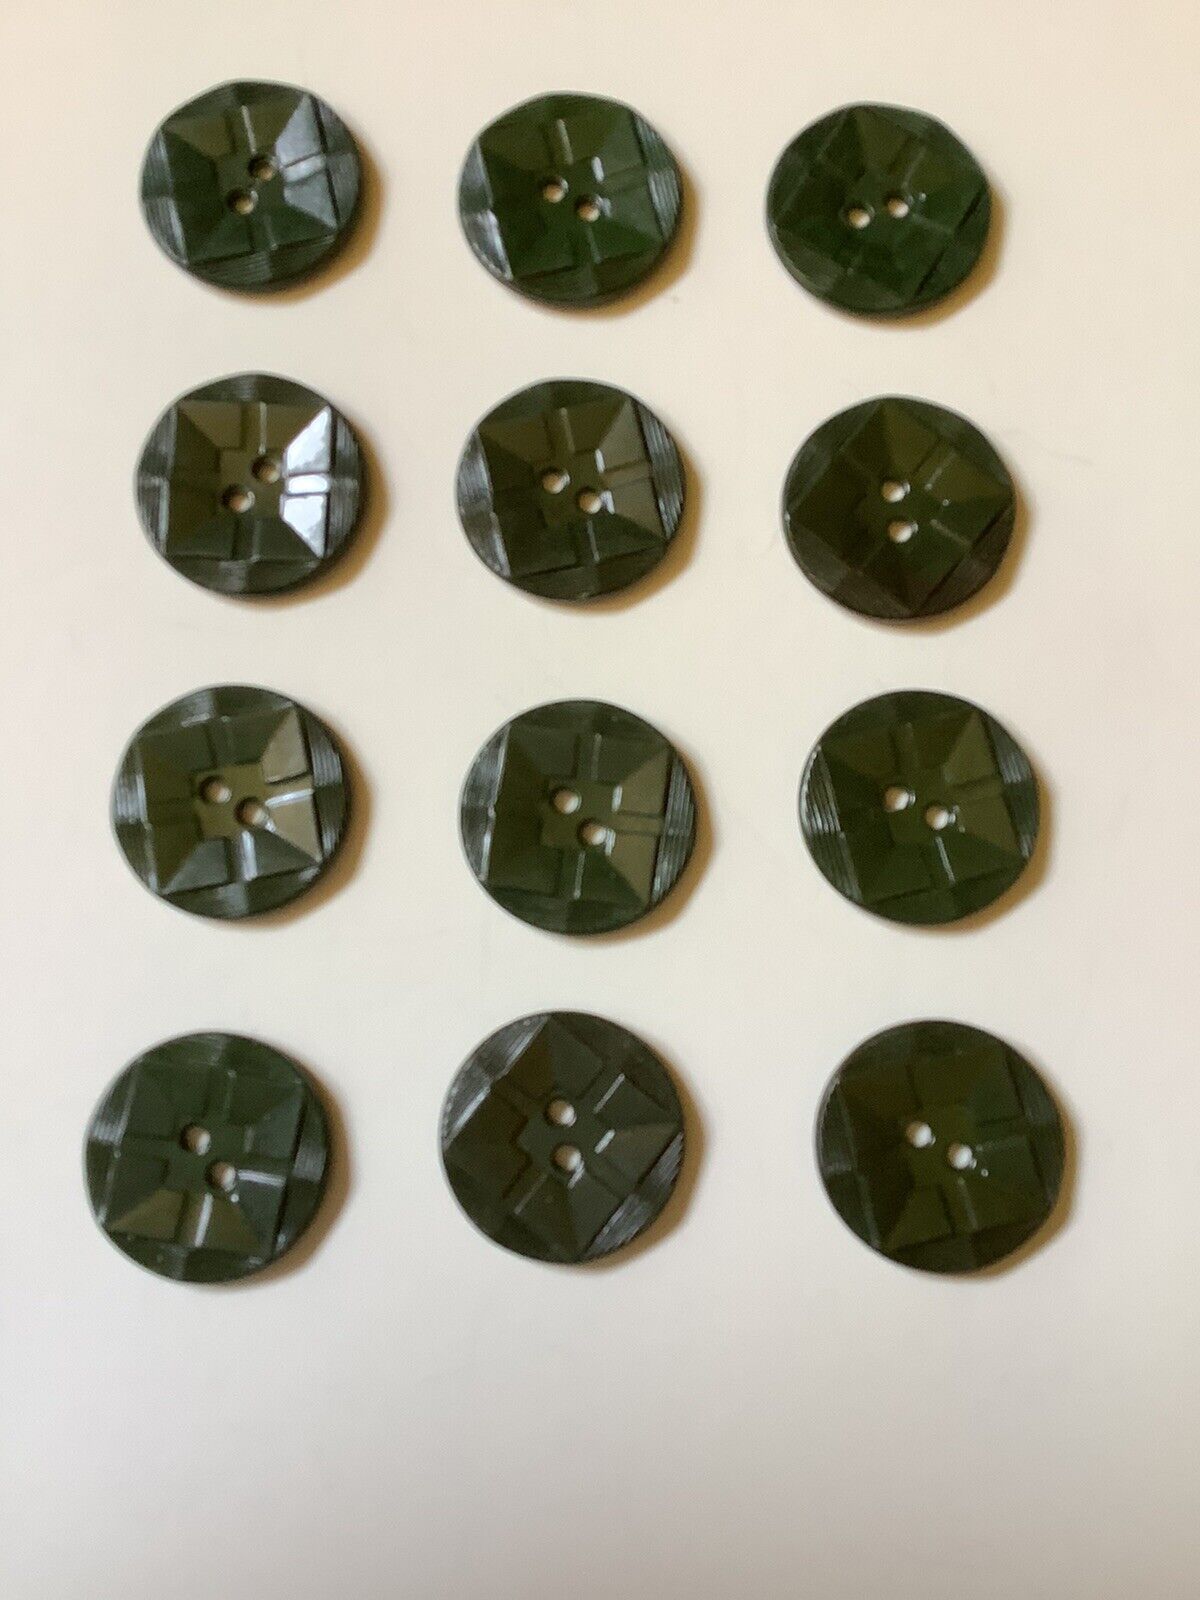 Vintage 1930’ Art Deco Bakelite Buttons. 12 Green Bakelite Buttons. Wonderful